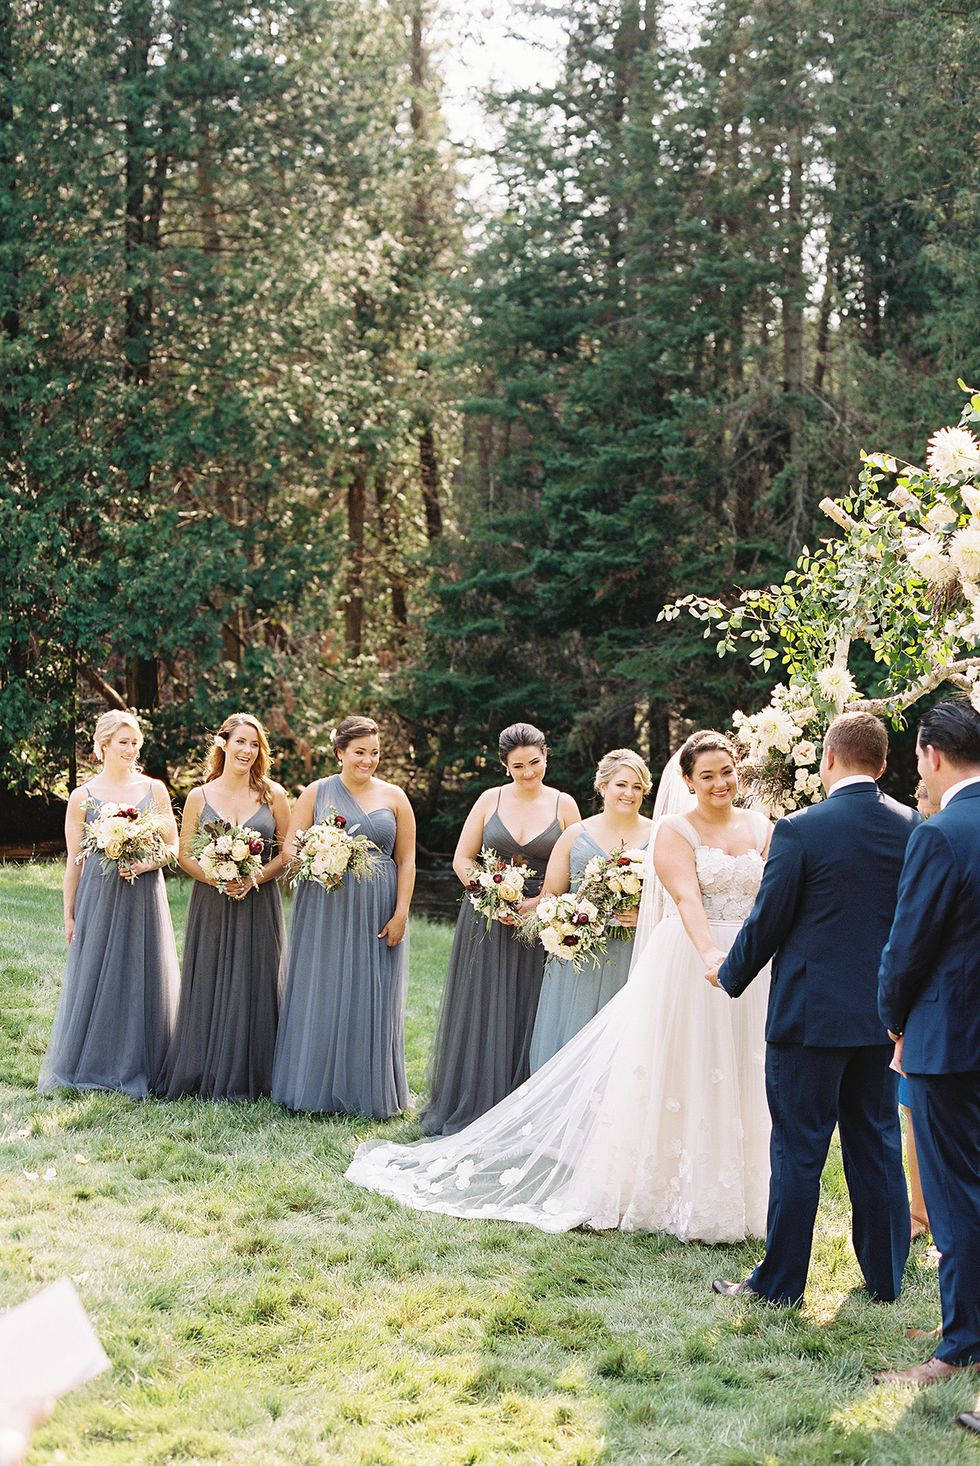 15 Amazing Wedding Altar Ideas and Ceremony Backdrops - Wedding ...